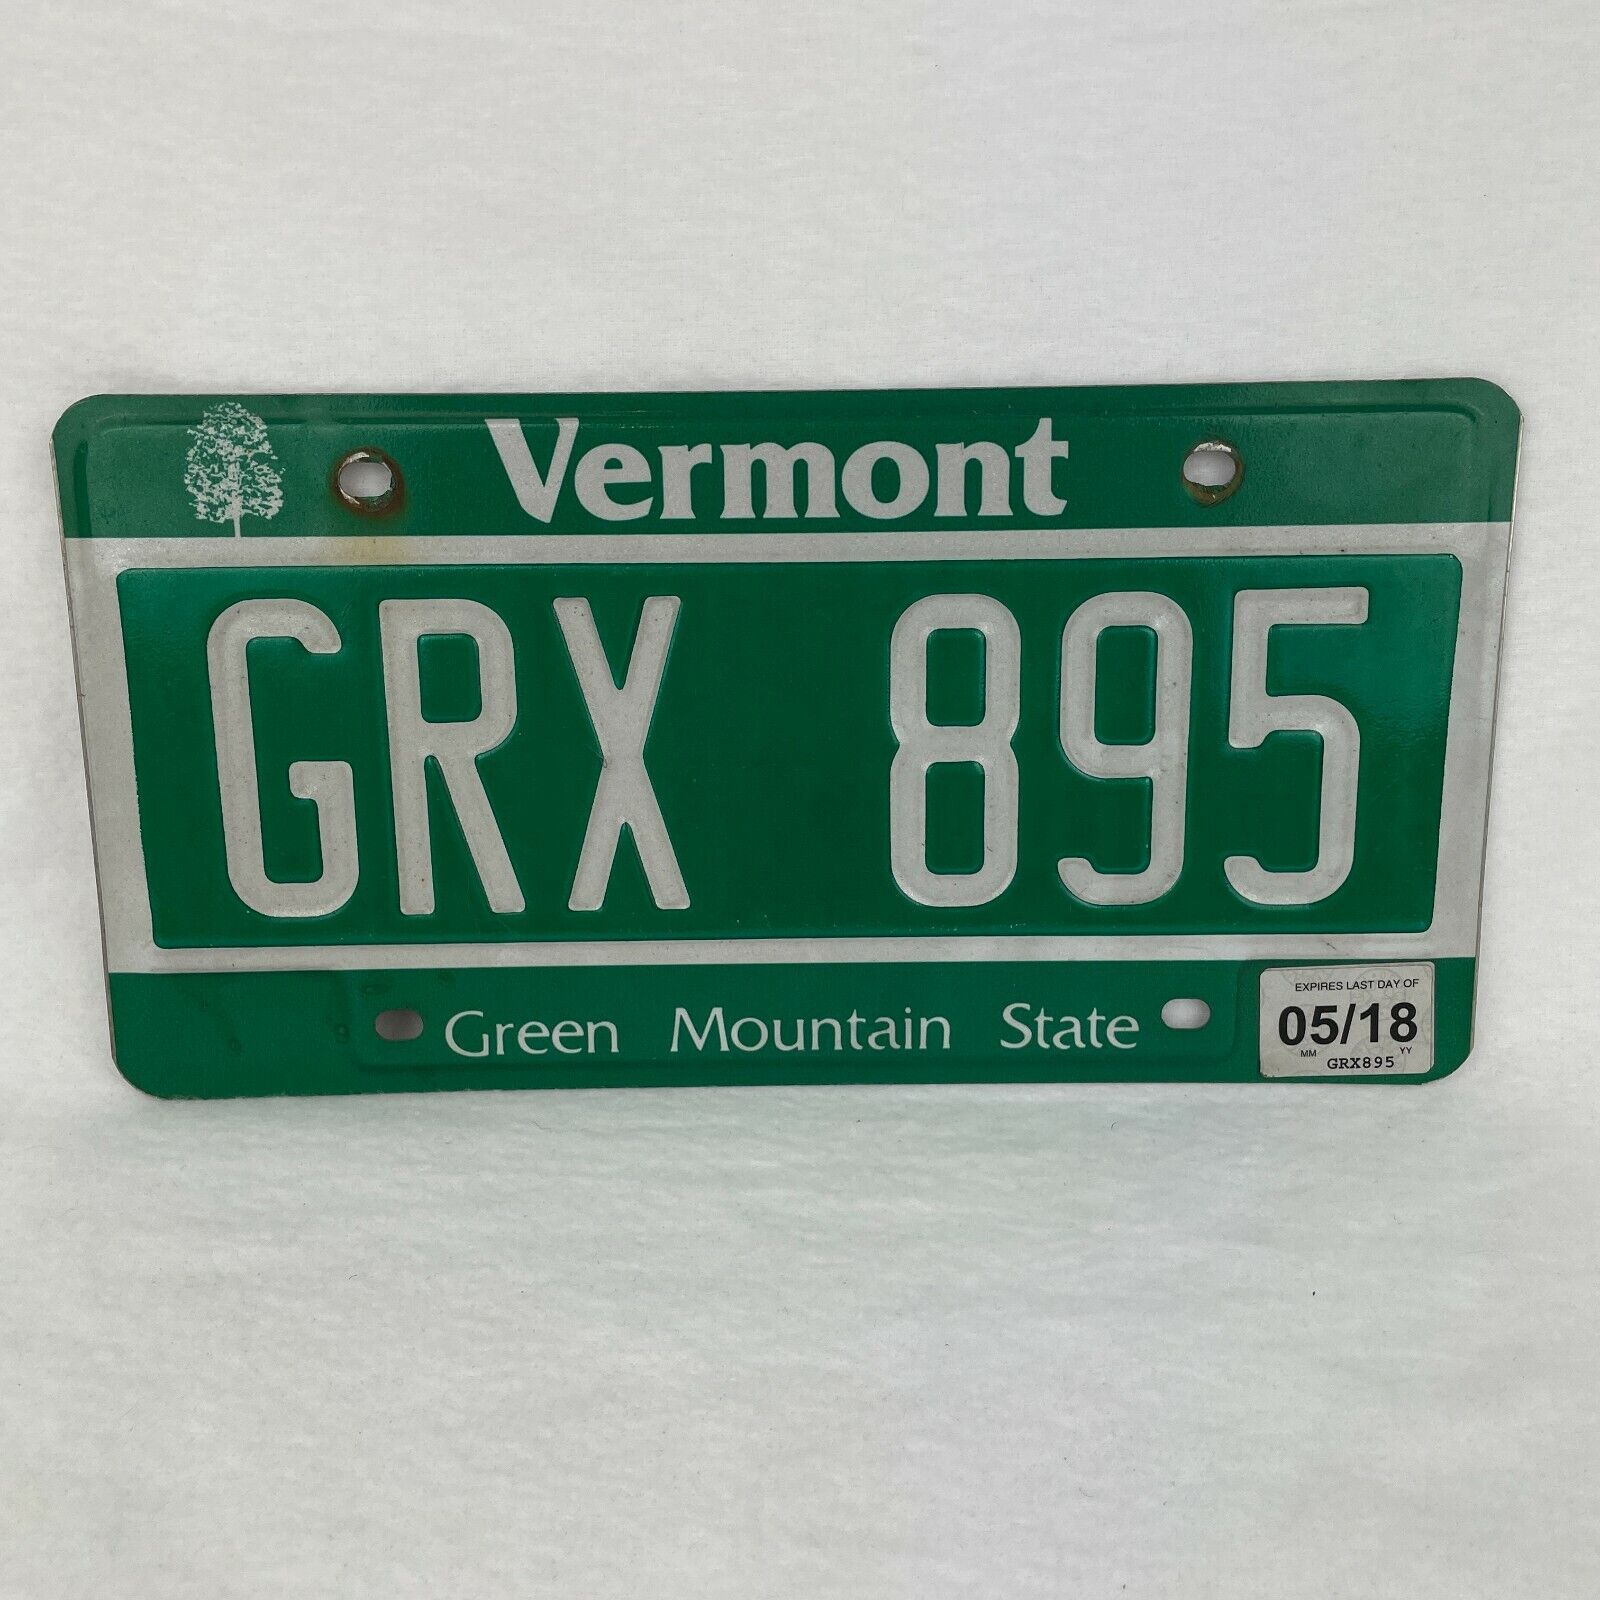 2018 United States Vermont Green Mountain Passenger License Plate Grx 895